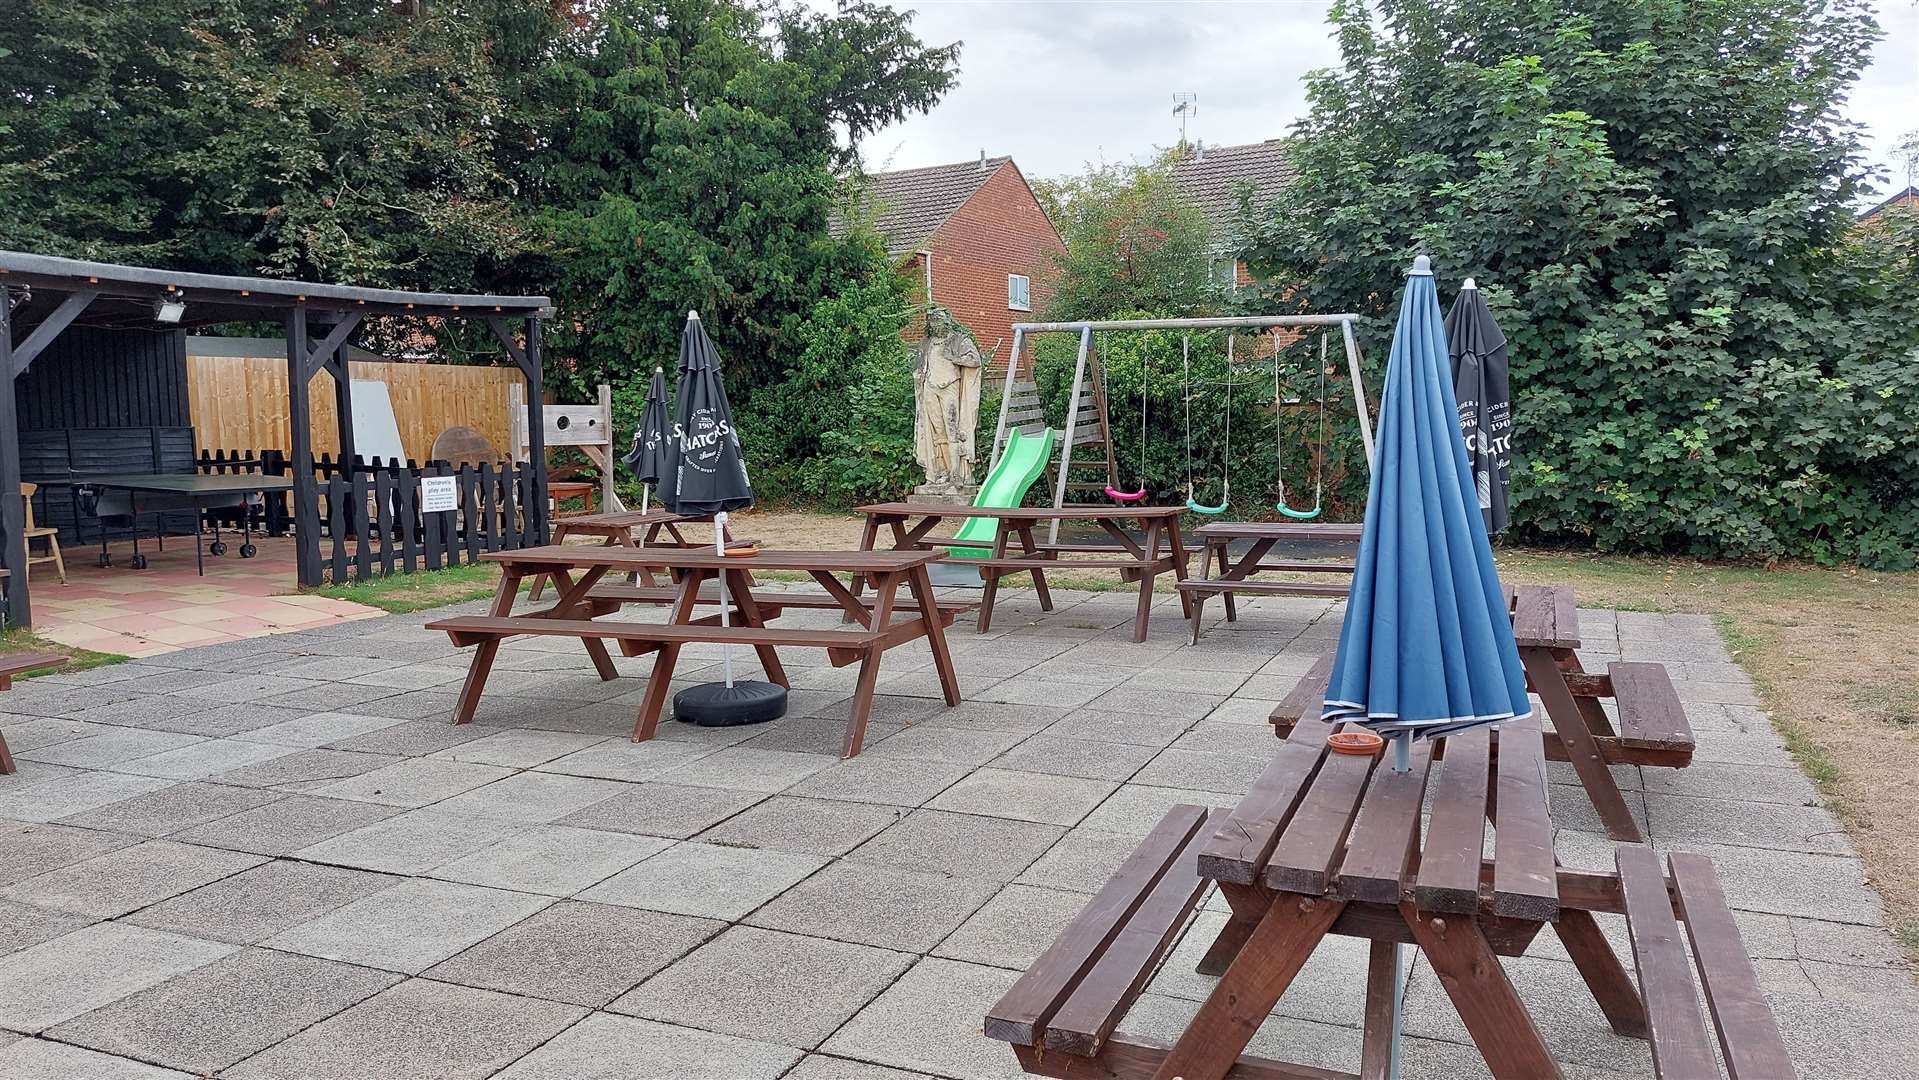 The new garden area at the William Harvey Inn in Willesborough, Ashford